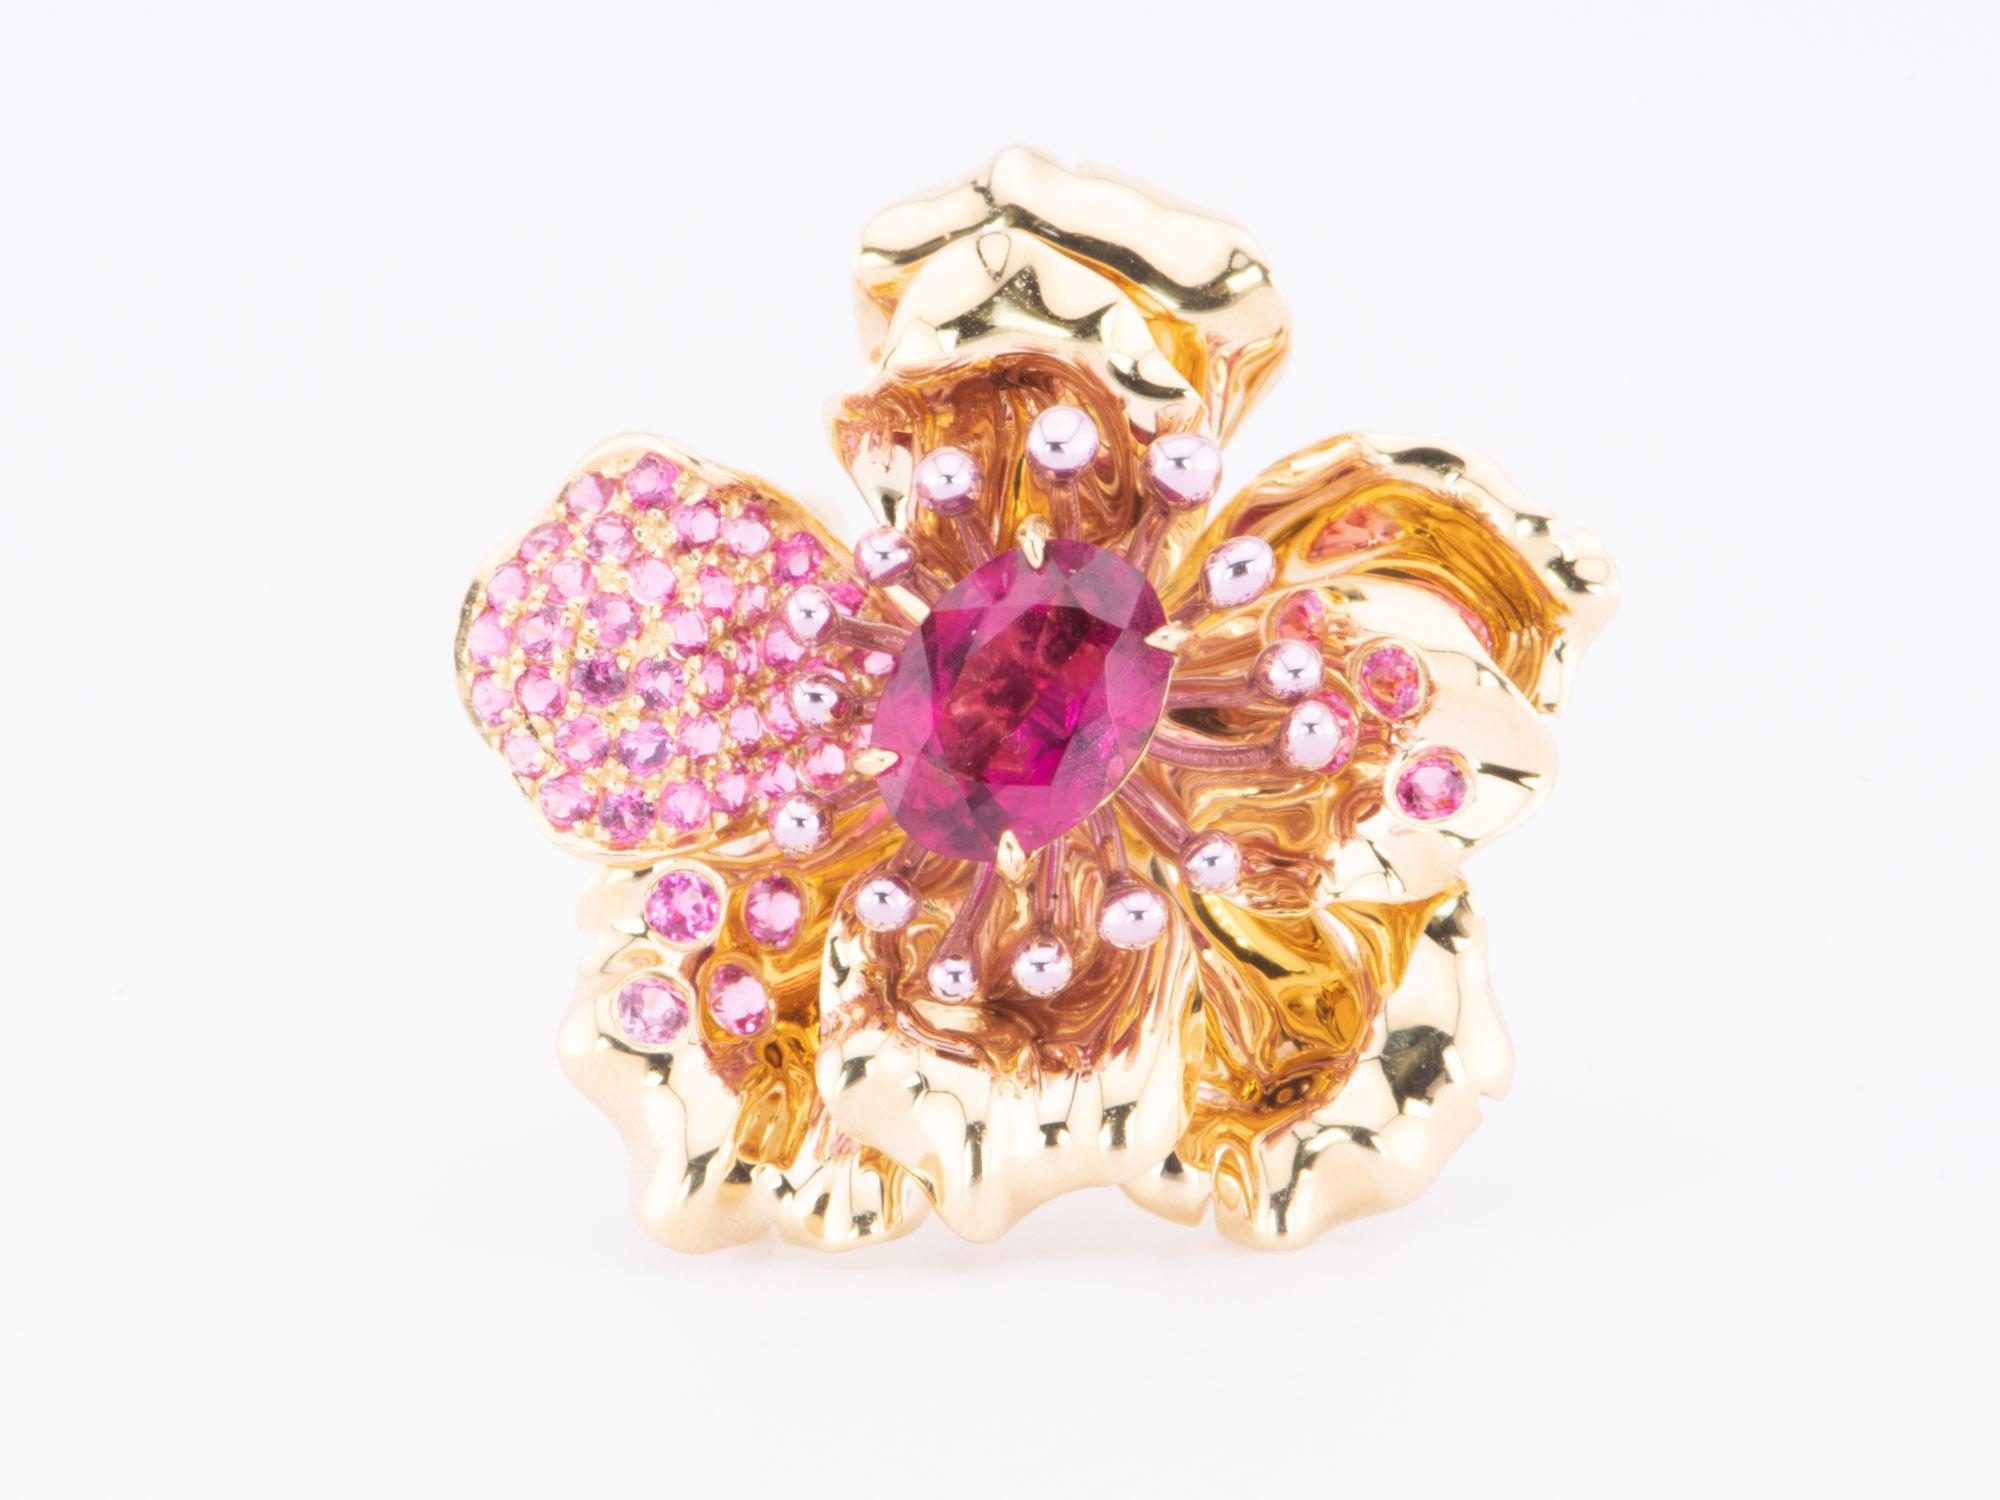 Art Jewelry Rubellite Tourmaline Center Flower Ring / Pendant 18K Gold R6641 For Sale 1